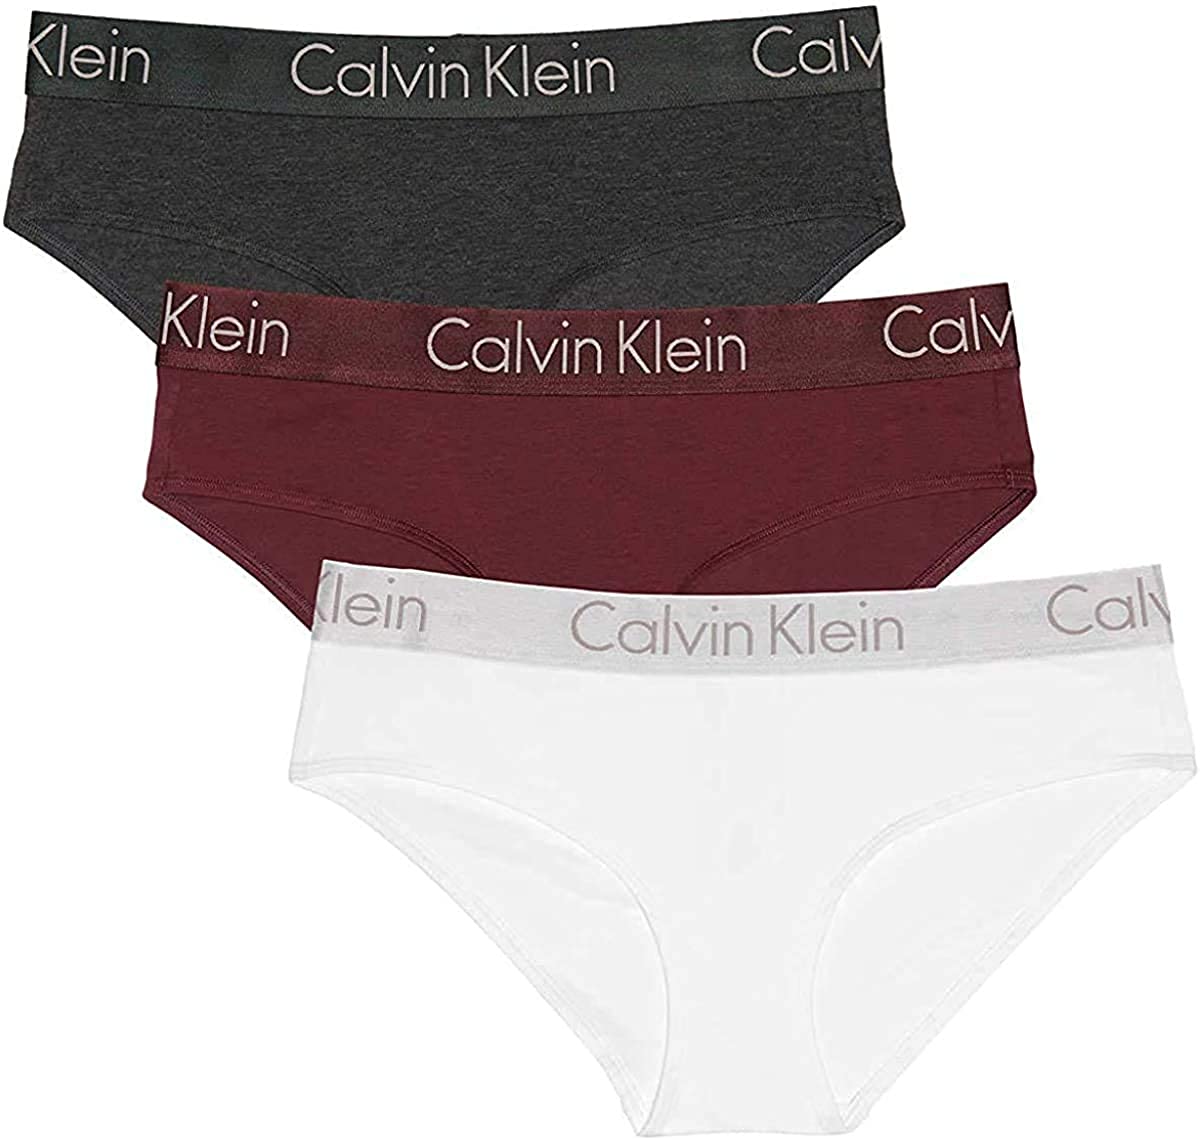 Women Clothing Calvin Klein Underwear Wholesale Clothes Fashion 50-75% Off